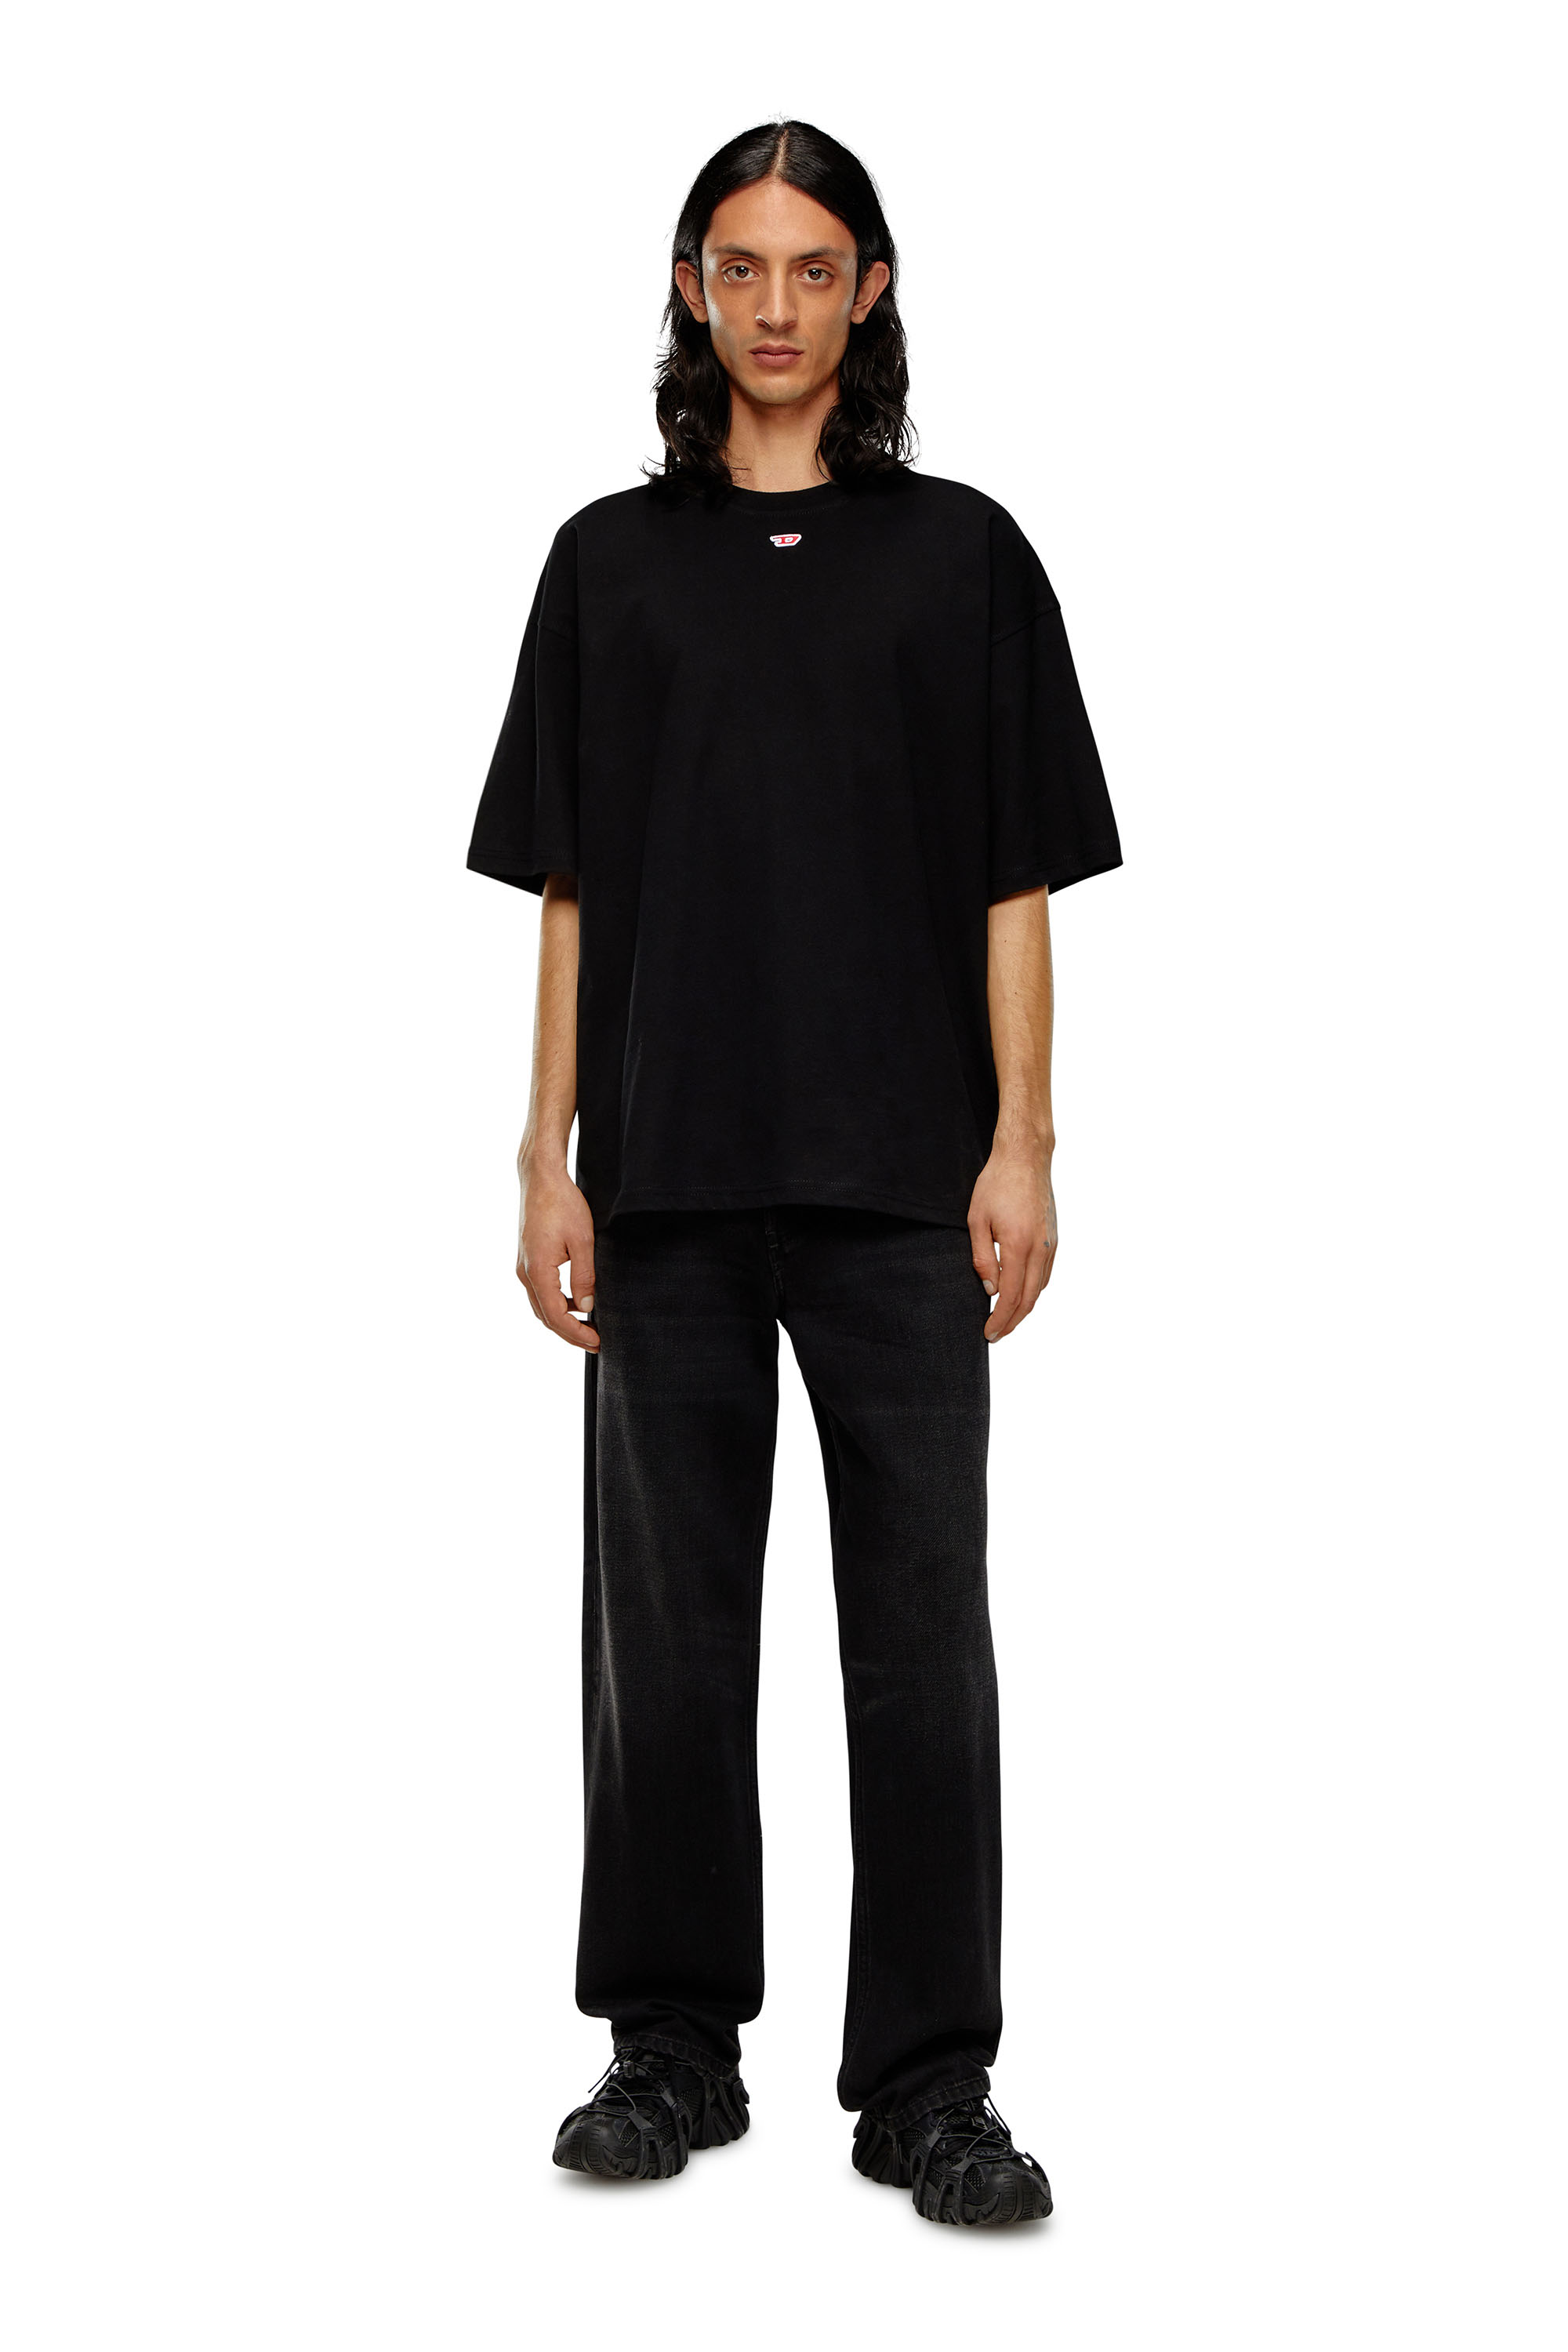 Women's T-shirts: V-neck, Round neck | Shop Now on Diesel.com